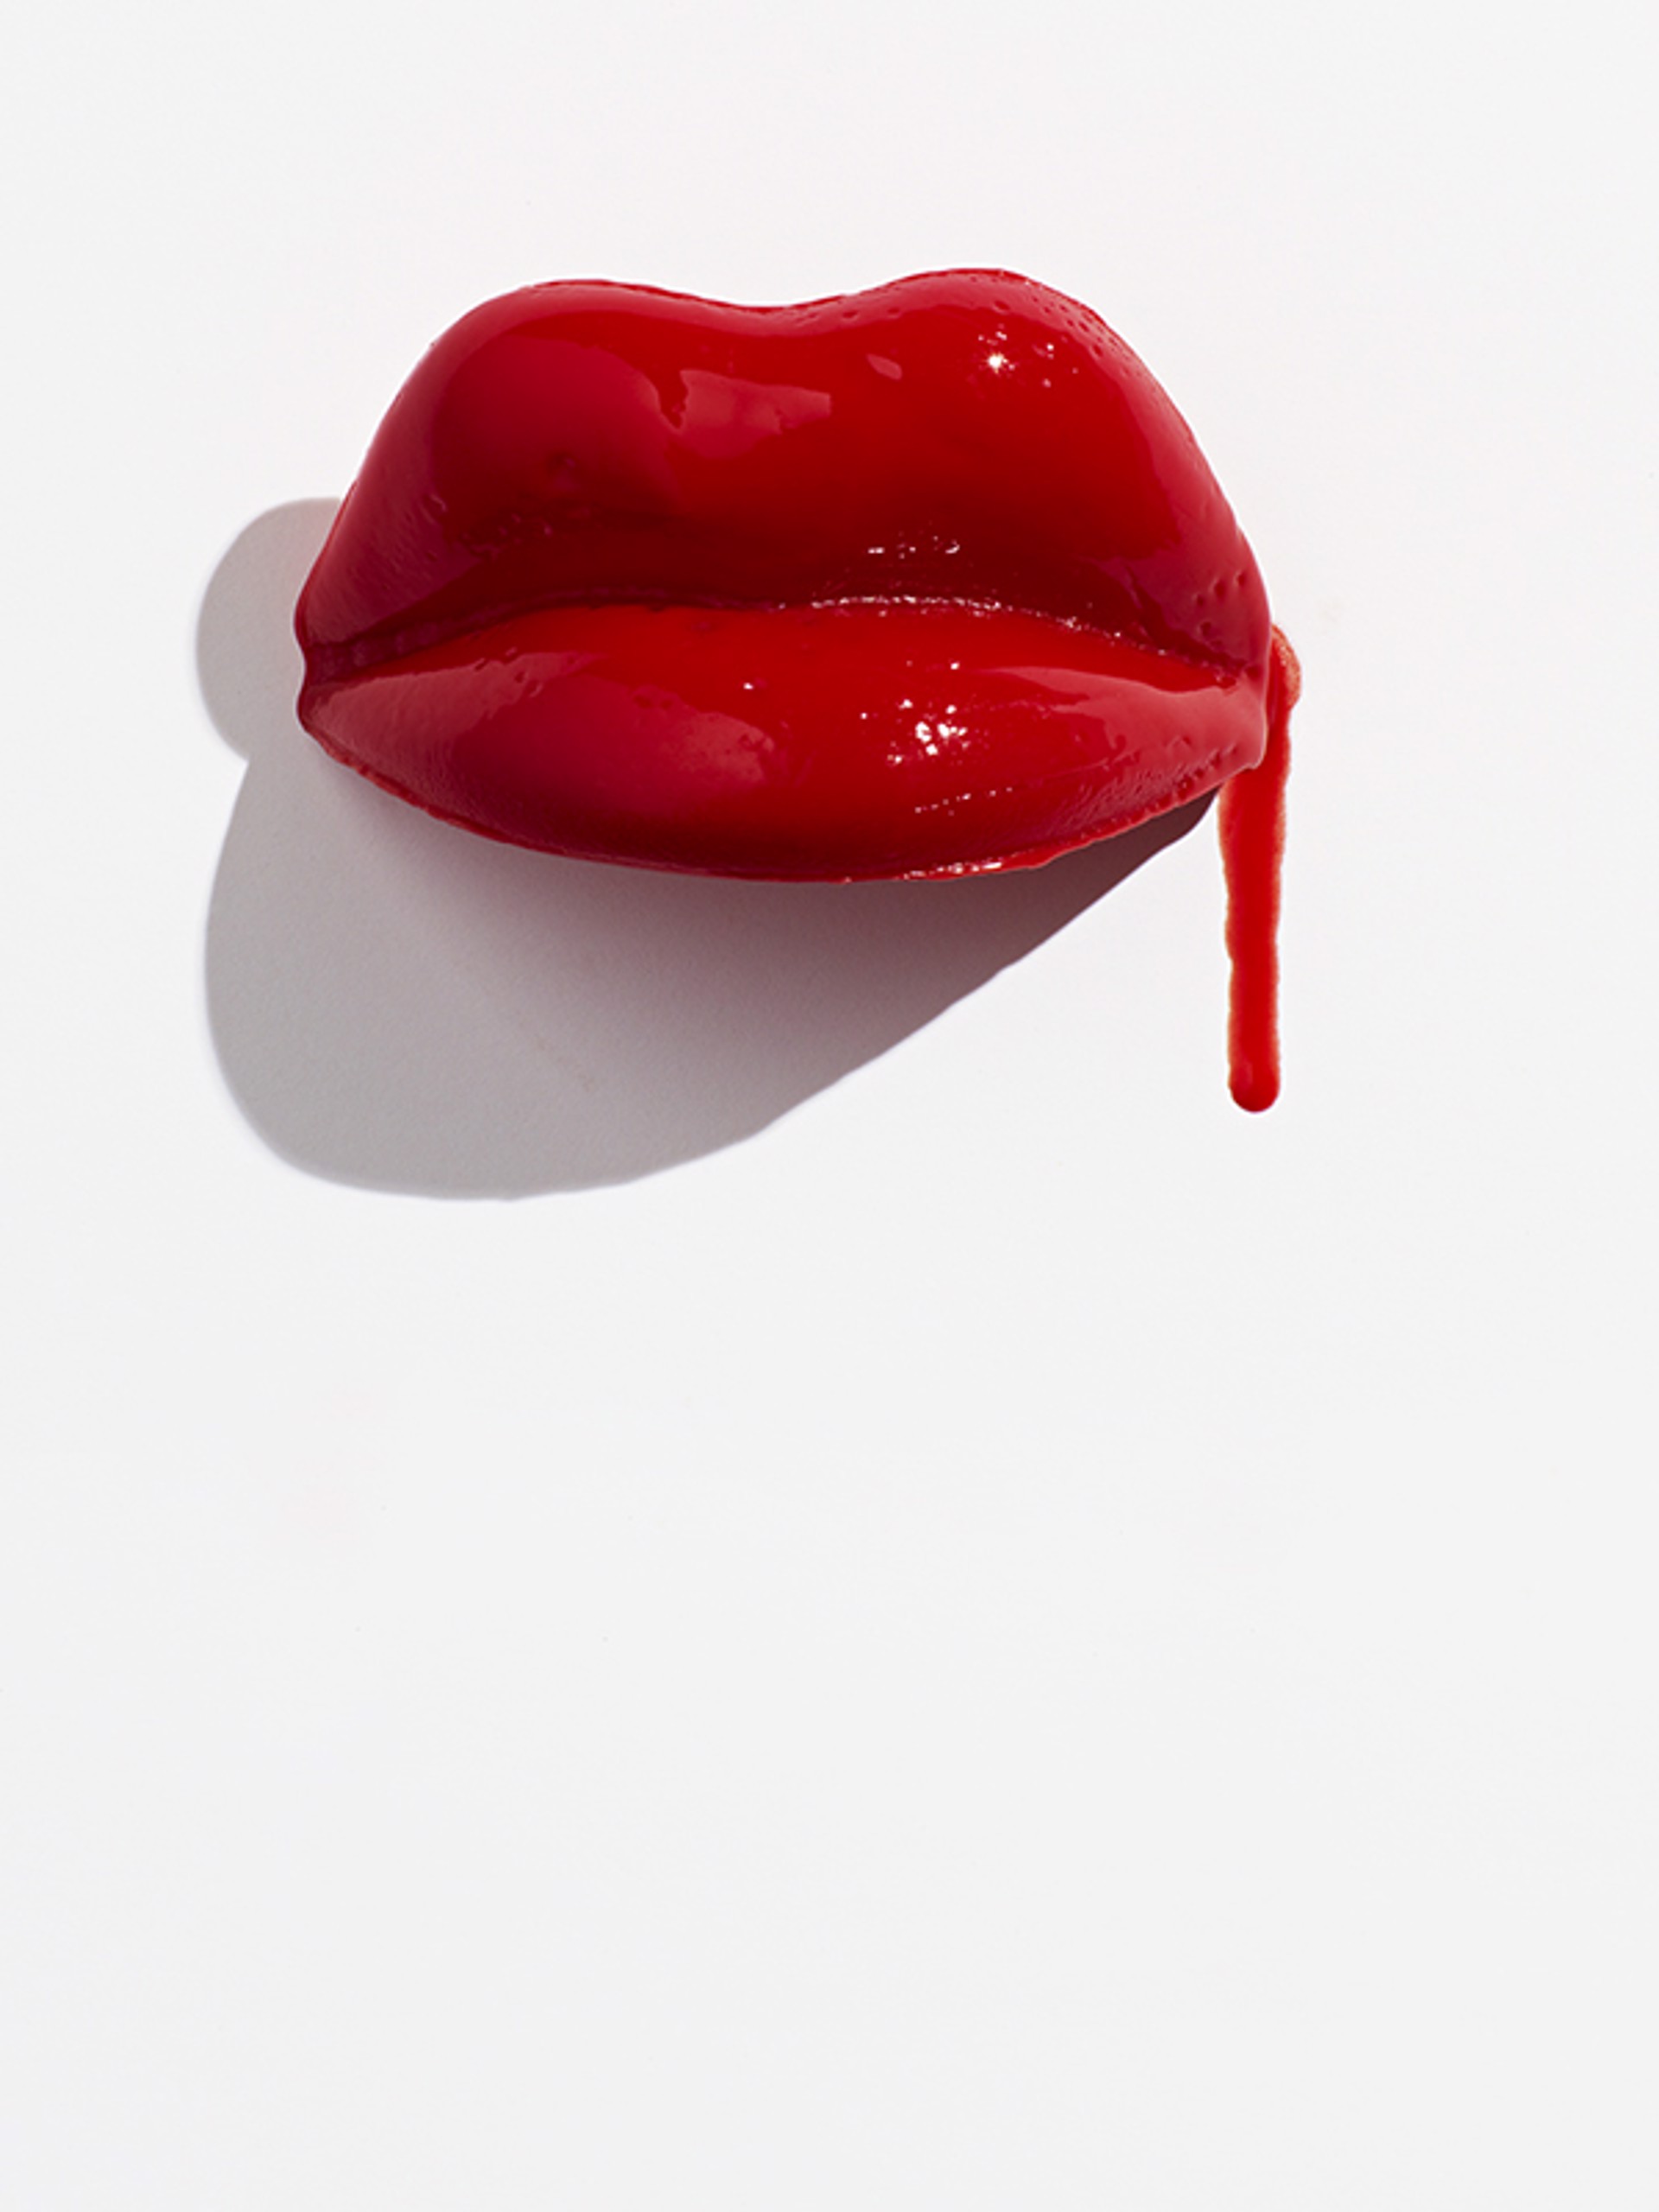 Luscious Lips #2 by Frank Sherwood White